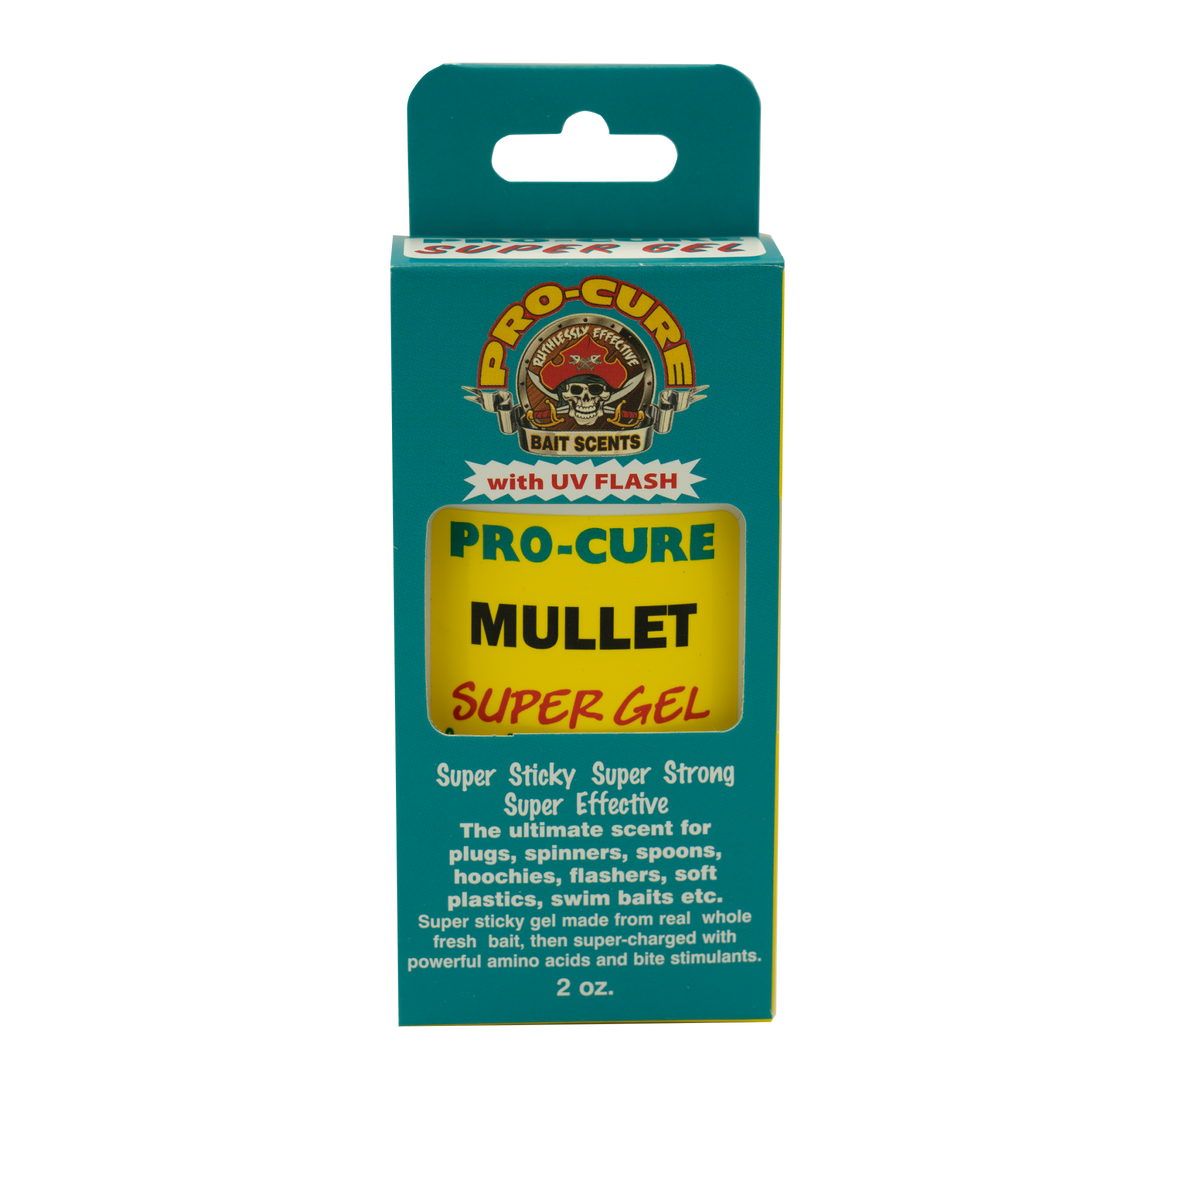 MULLET SUPER GEL – Pro-Cure, Inc